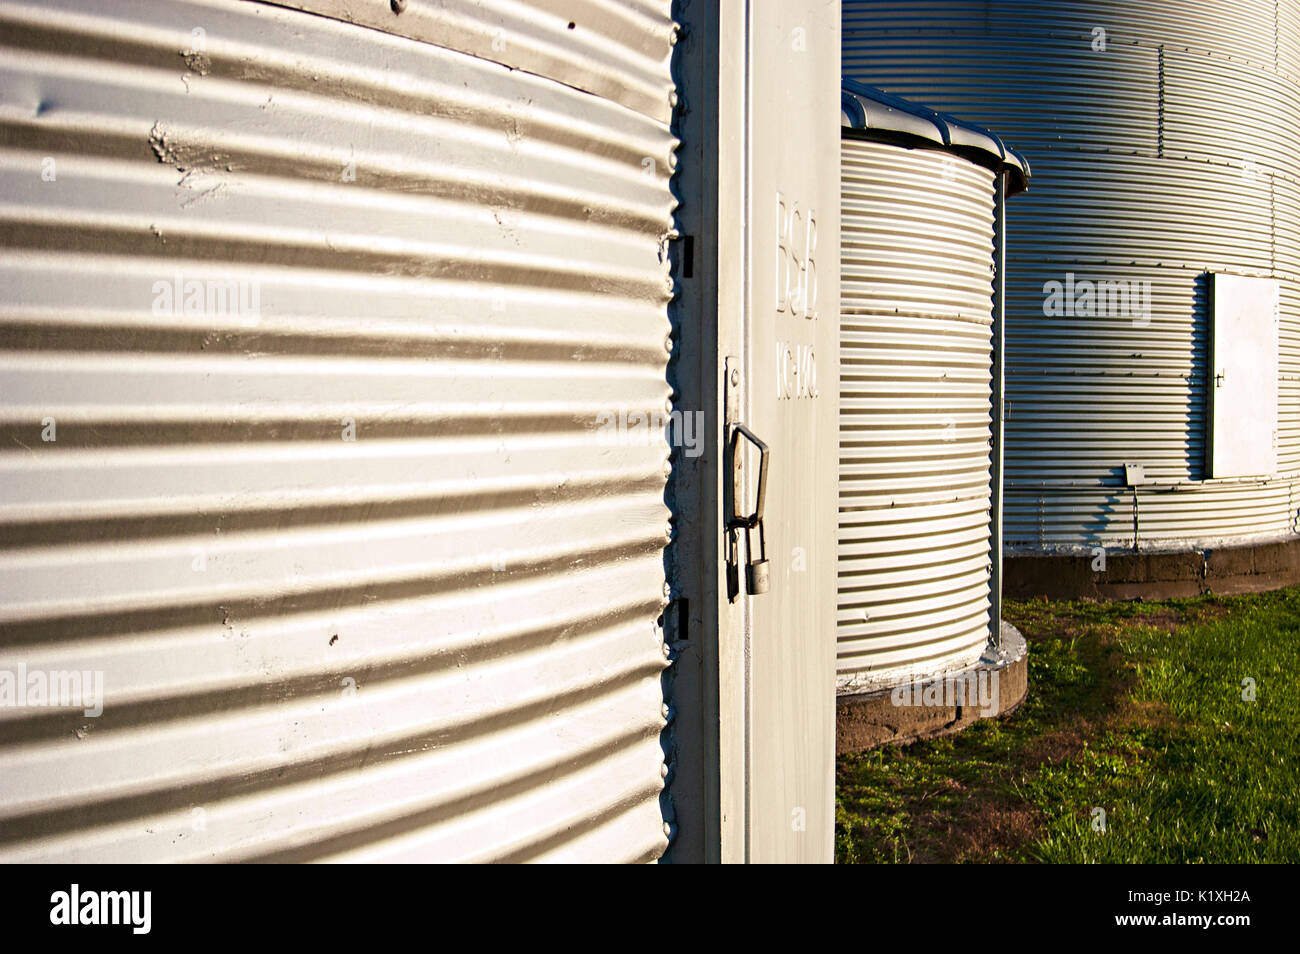 Grain bins in rural Indiana. Stock Photo